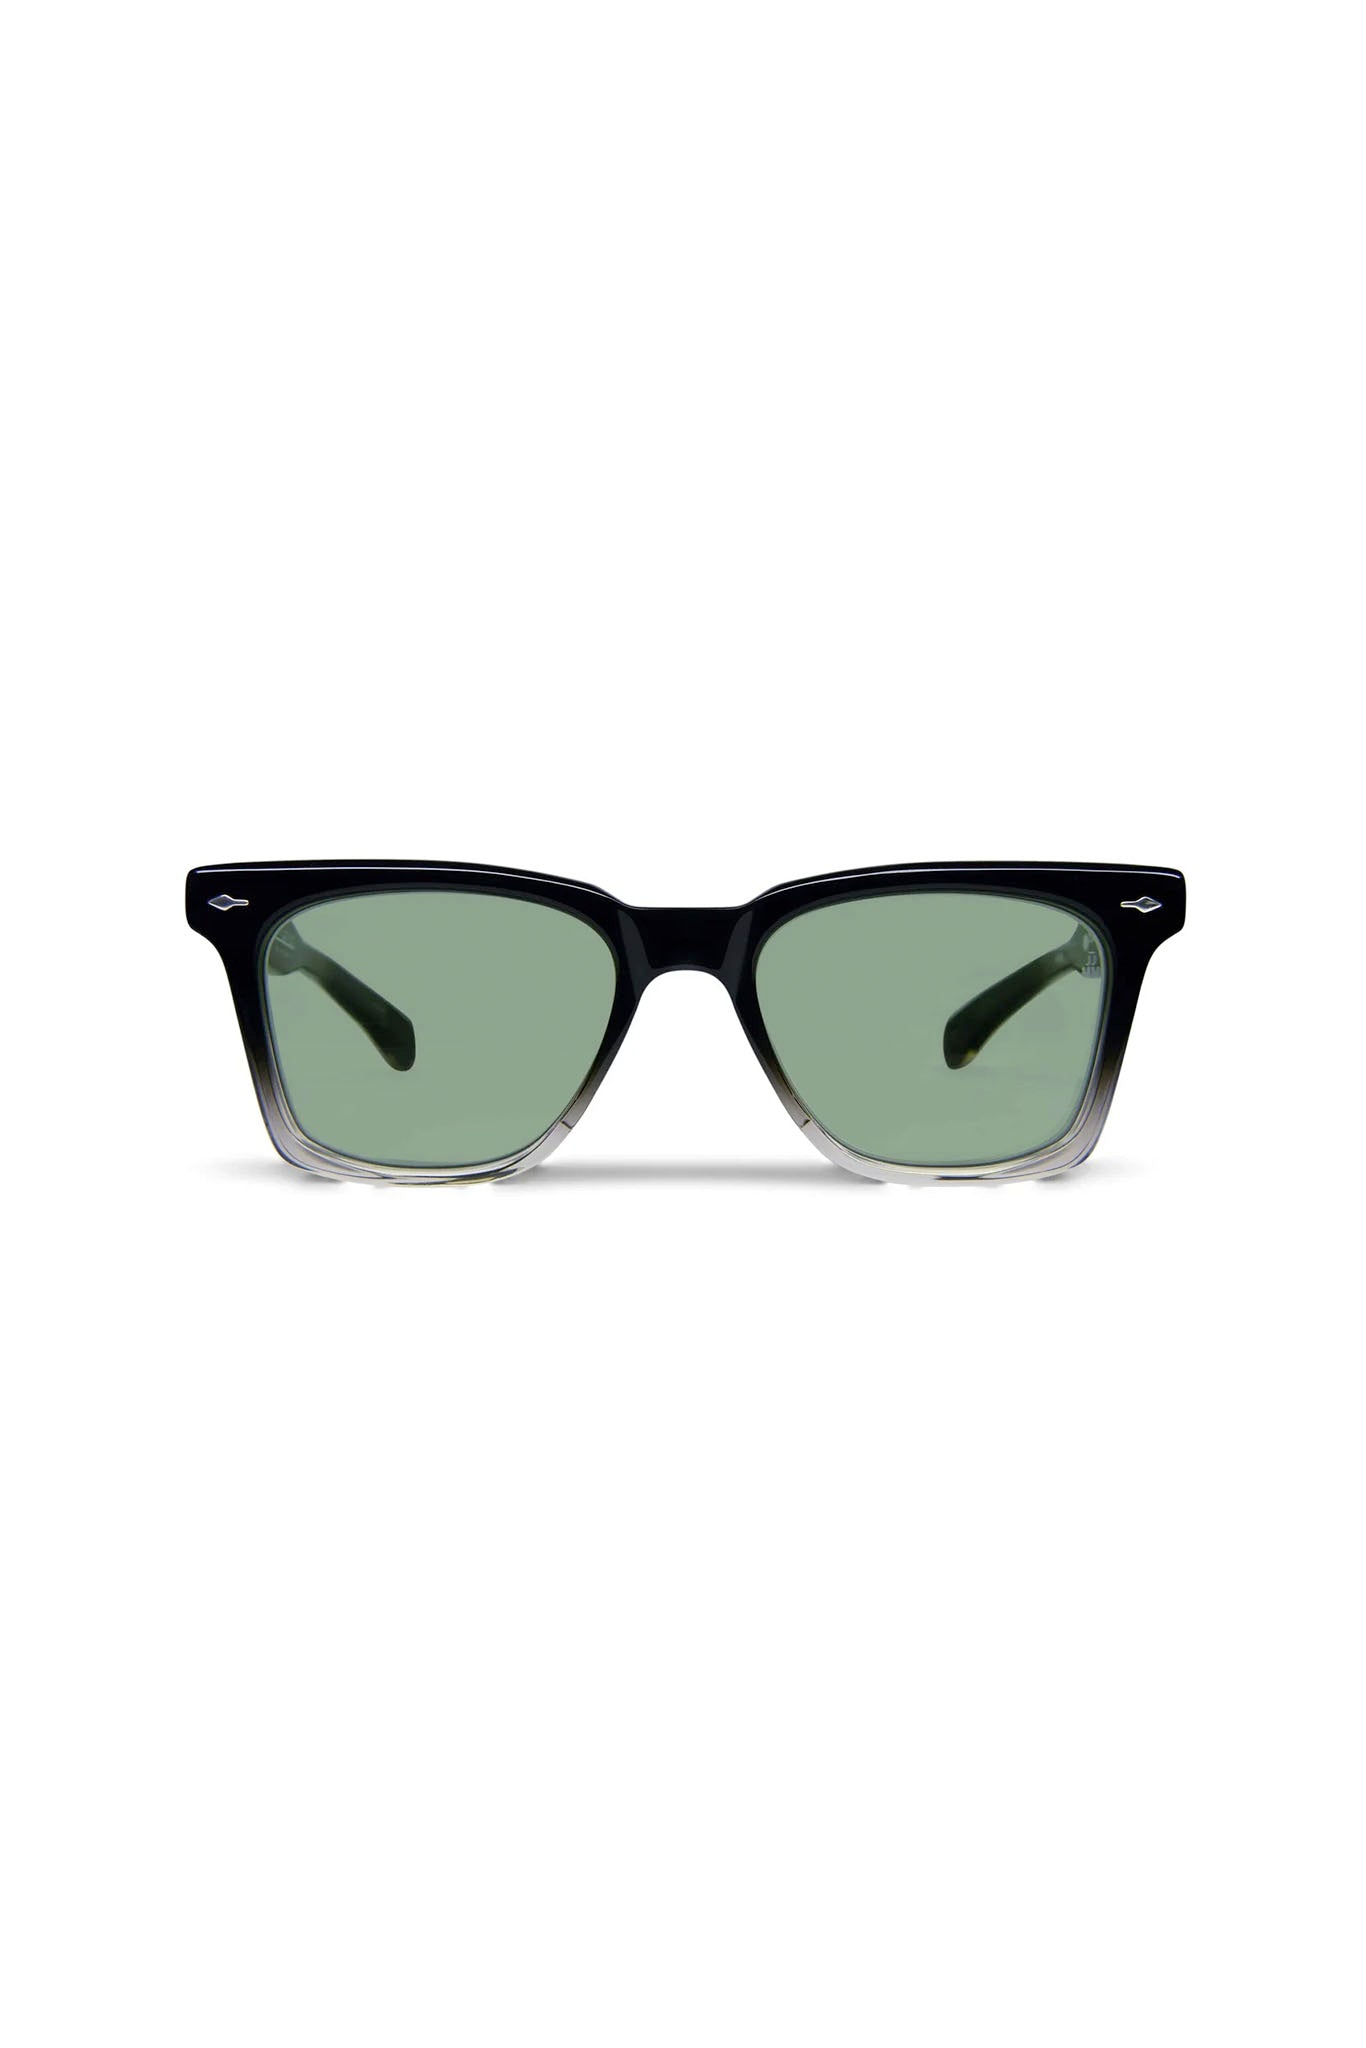 Black Fade Herbie Sunglasses